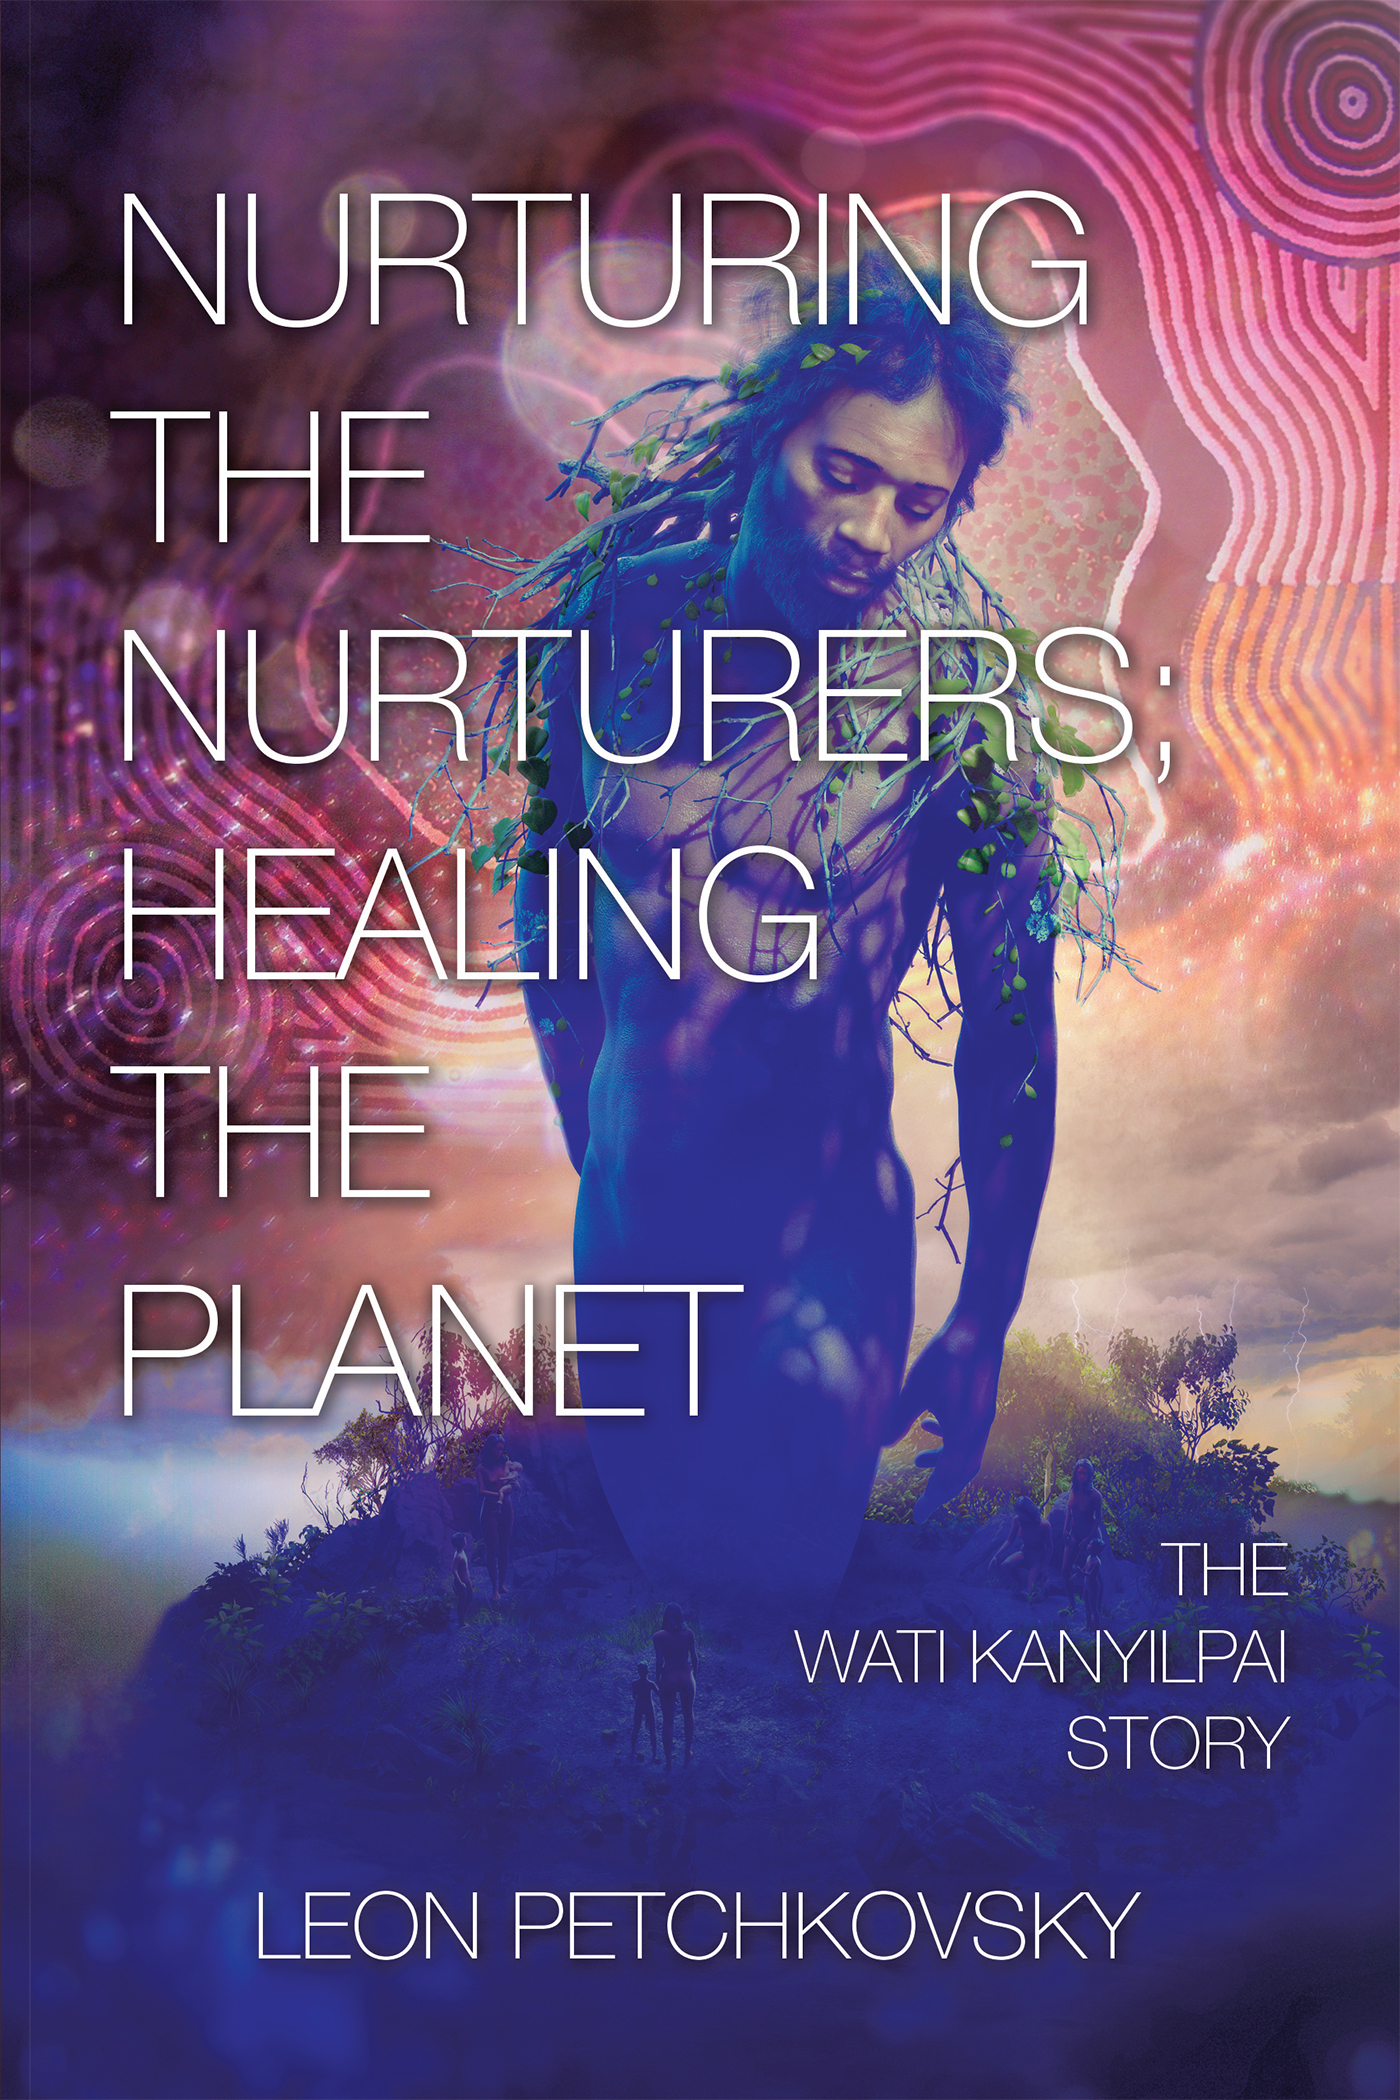 “Nurturing the Nurturers; Healing the Planet: The Wati Kanyilpai Story”
By Leon Petchkovsky  
